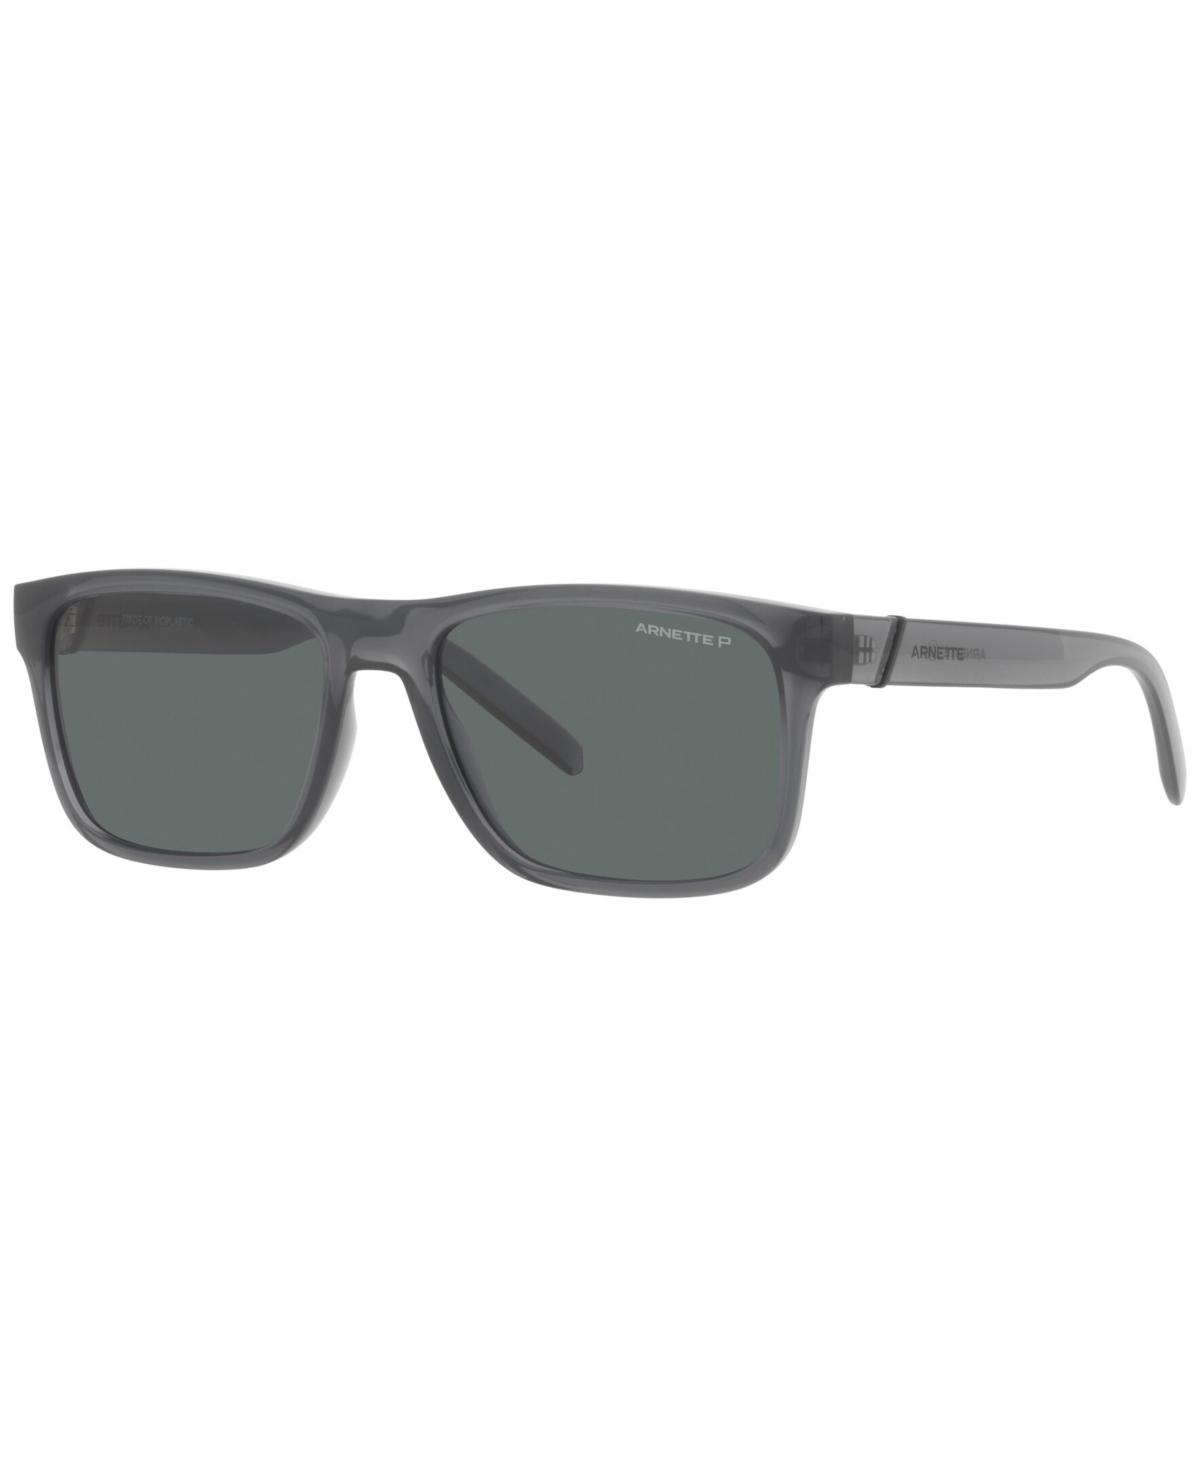 Unisex Polarized Sunglasses, AN4298 Bandra 55 - Transparent Gray